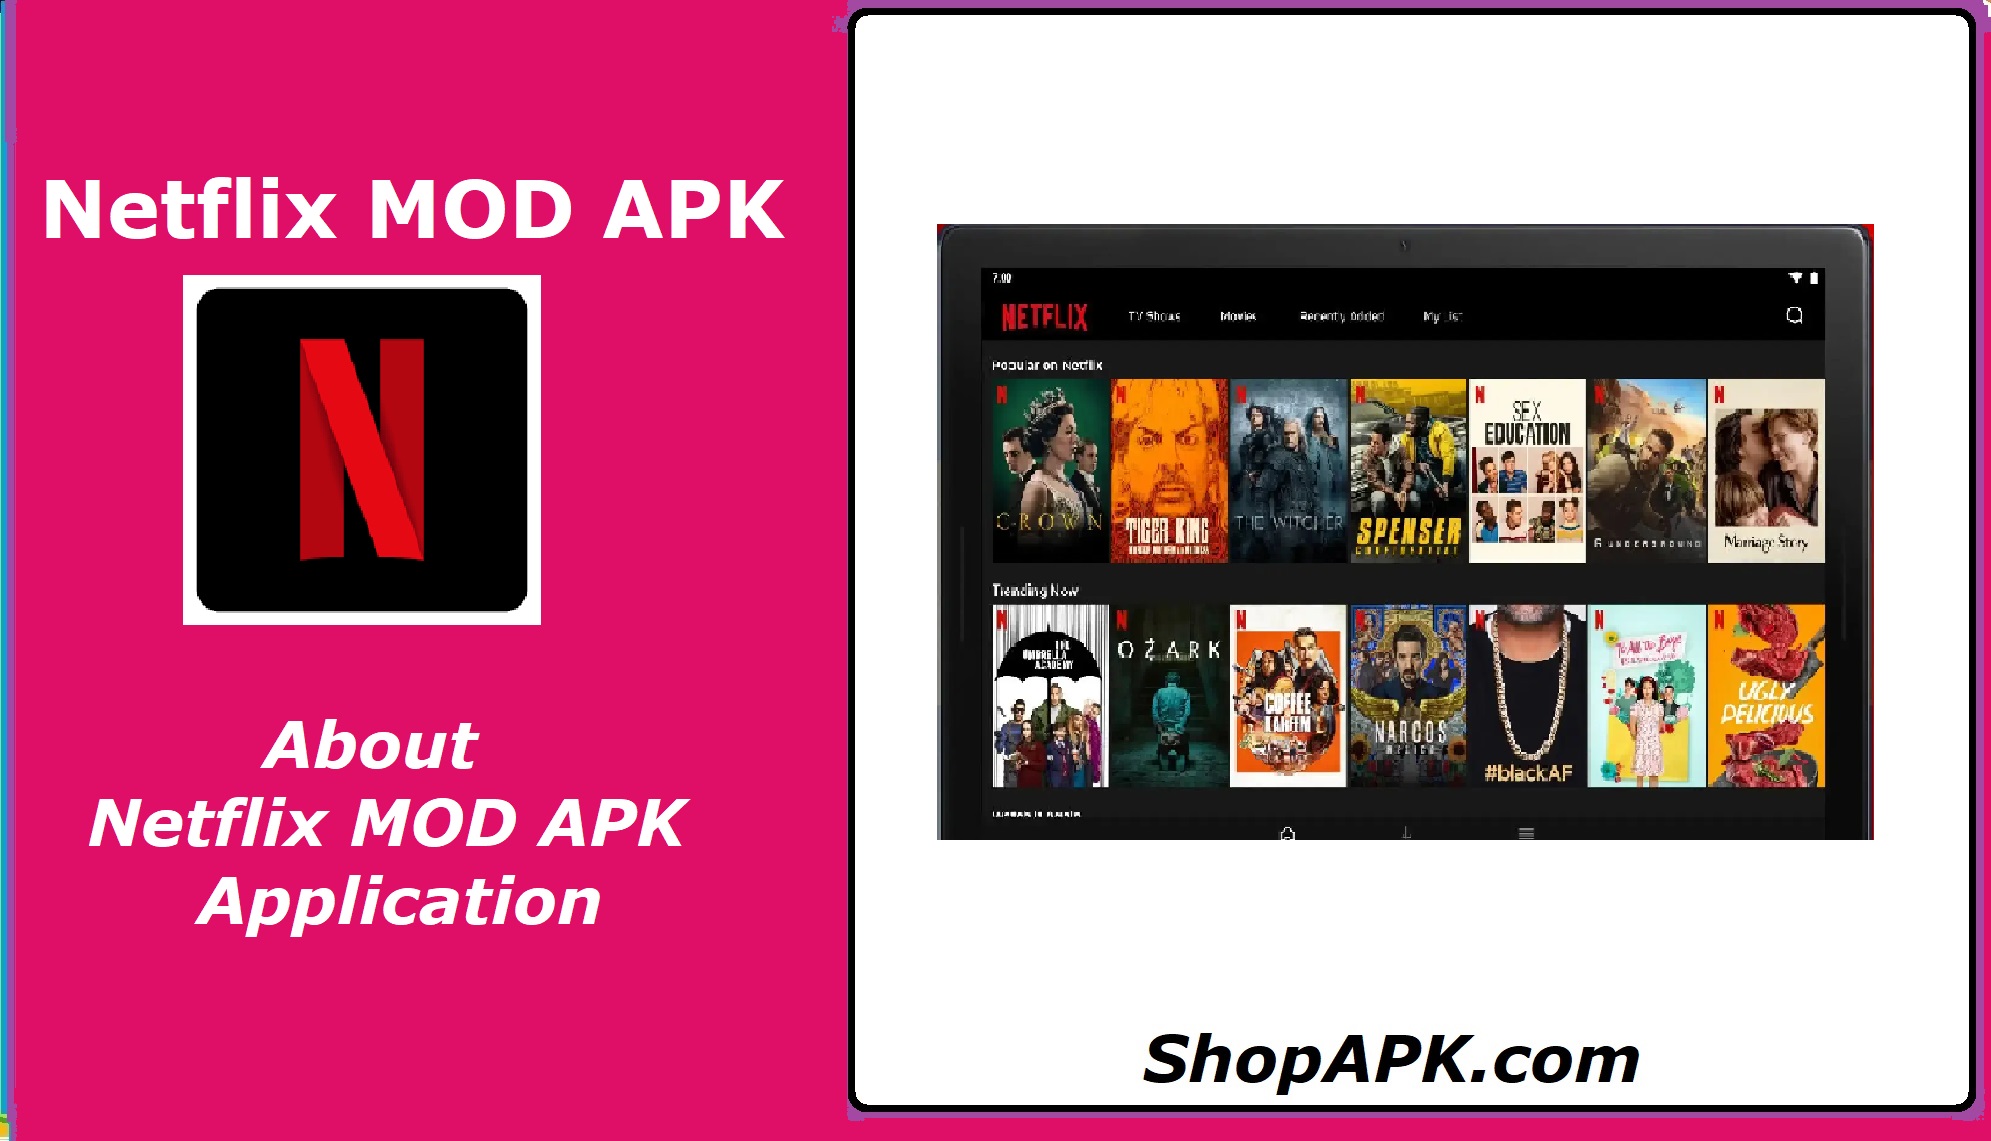 About Netflix MOD APK Application